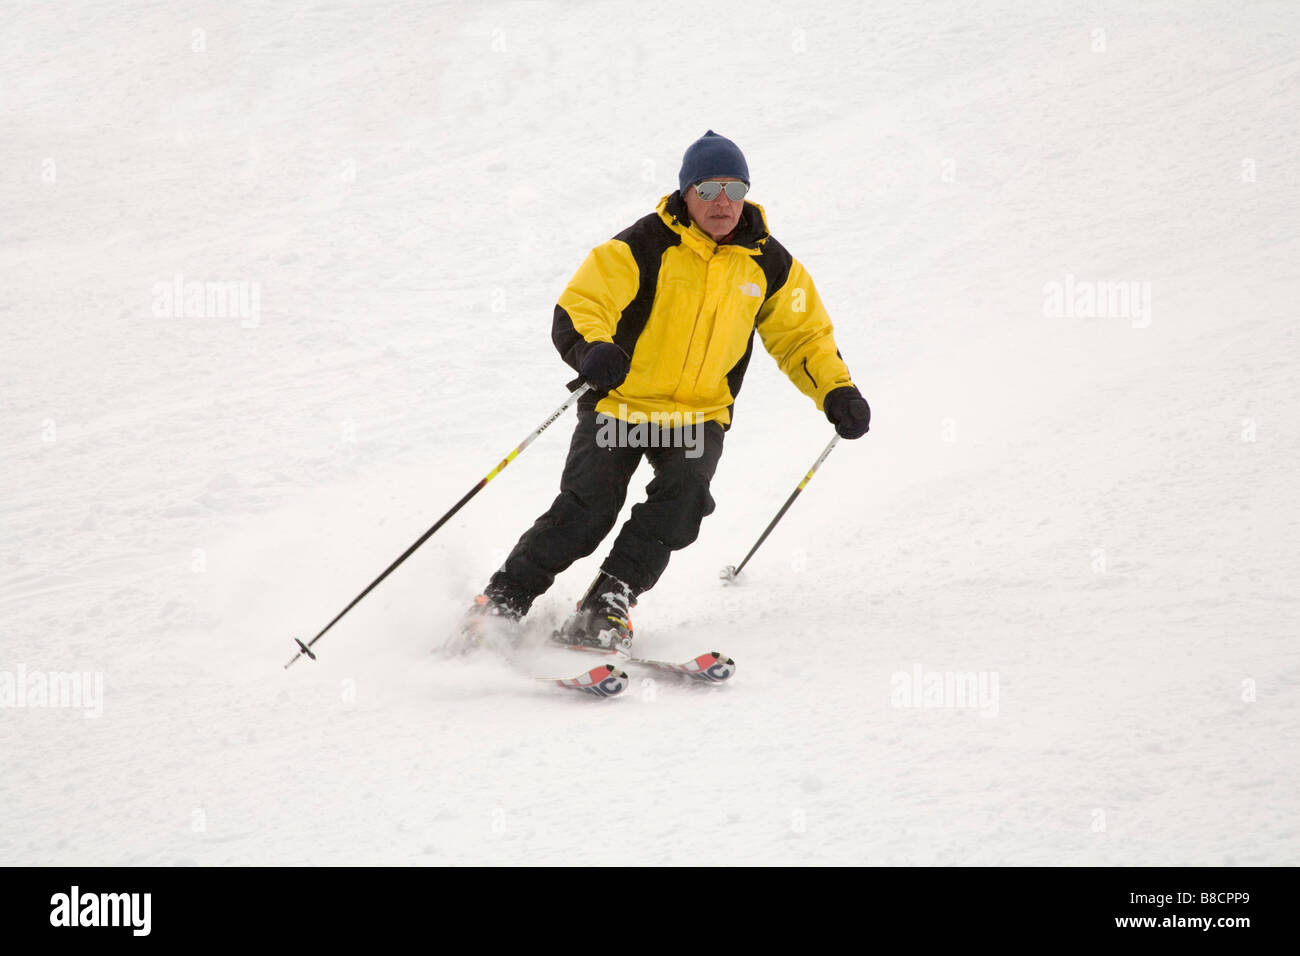 Chaqueta de esquí amarilla fotografías e imágenes alta resolución - Alamy